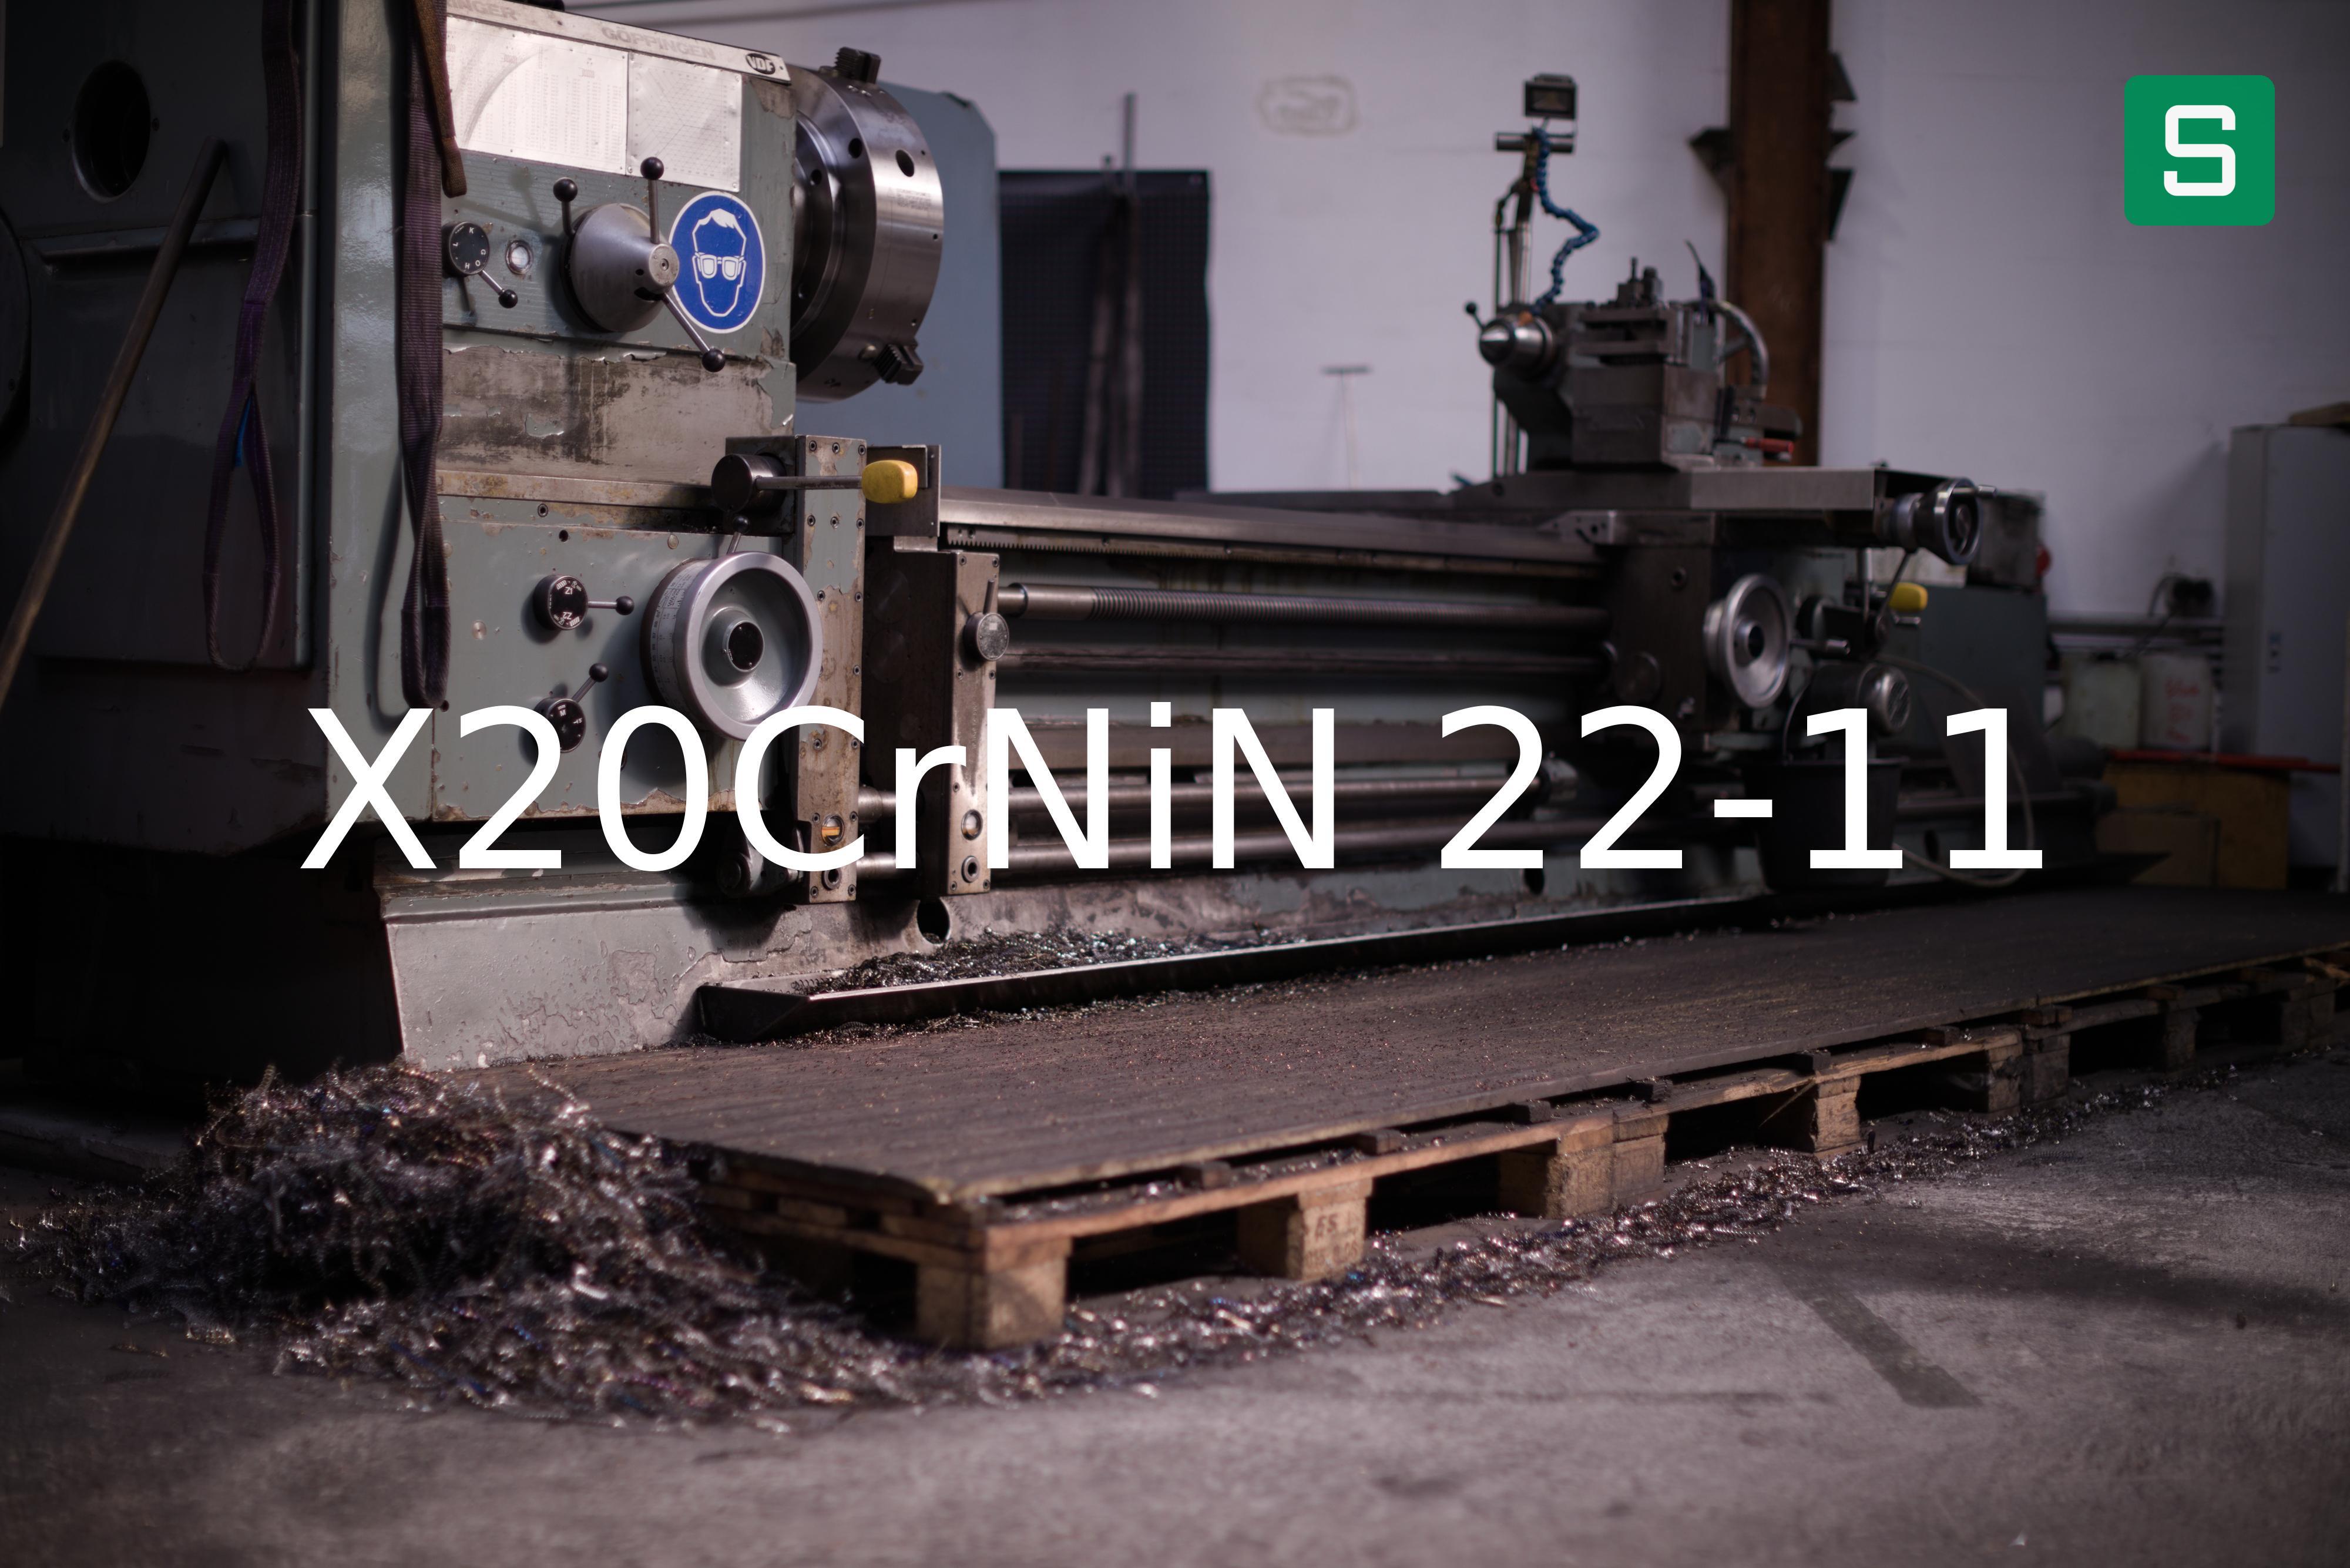 Steel Material: X20CrNiN 22-11